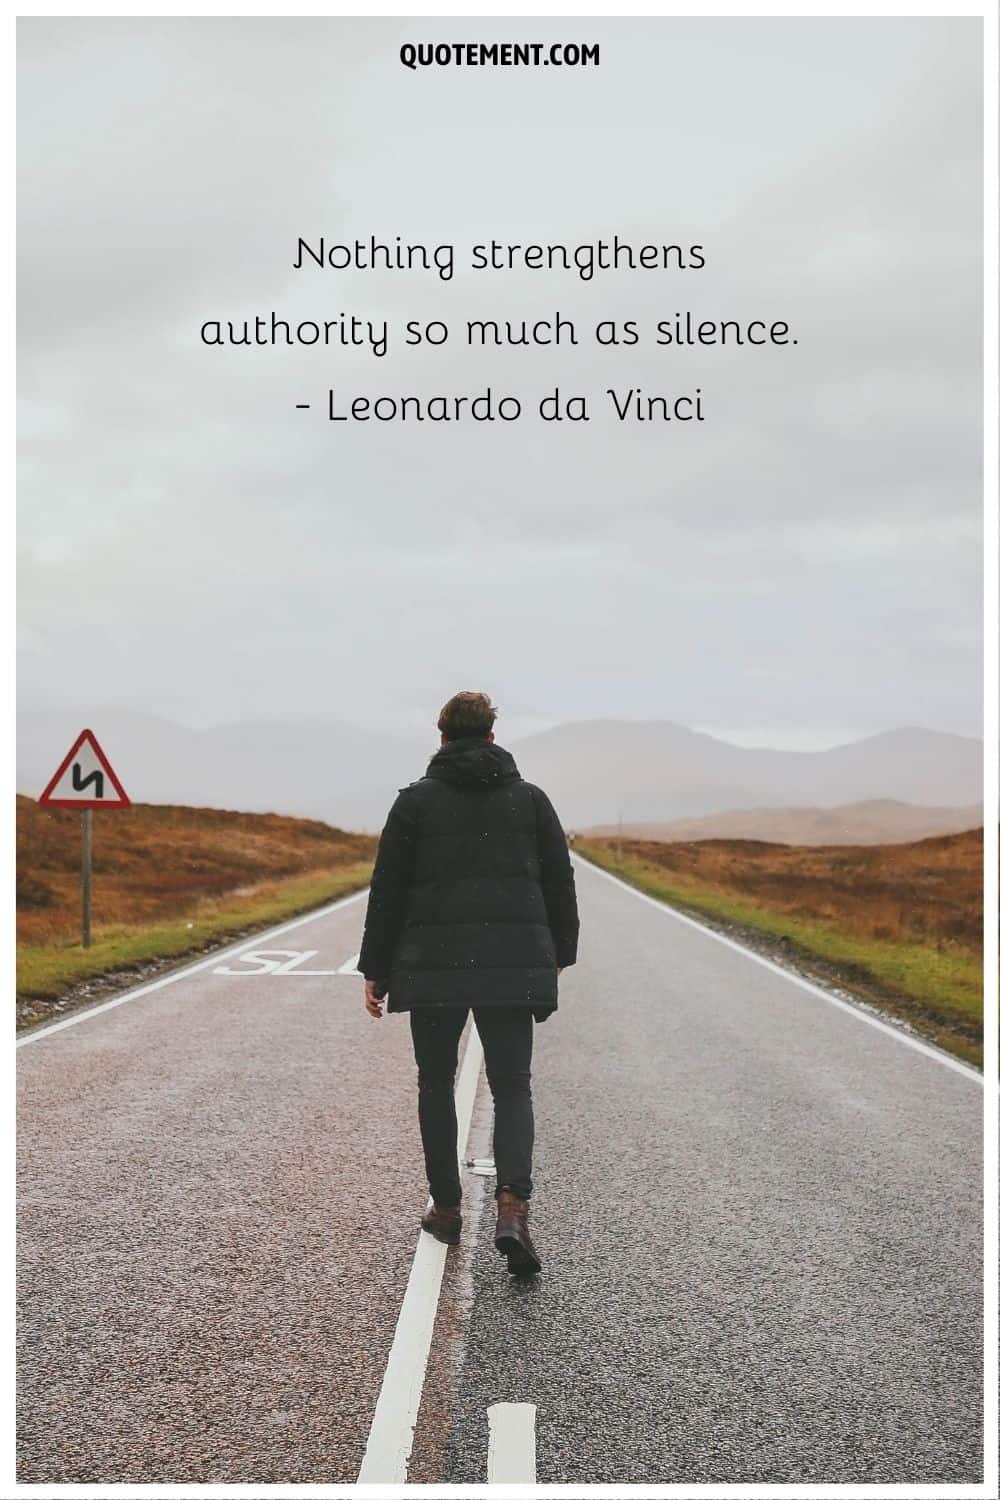 “Nothing strengthens authority so much as silence.” ― Leonardo da Vinci